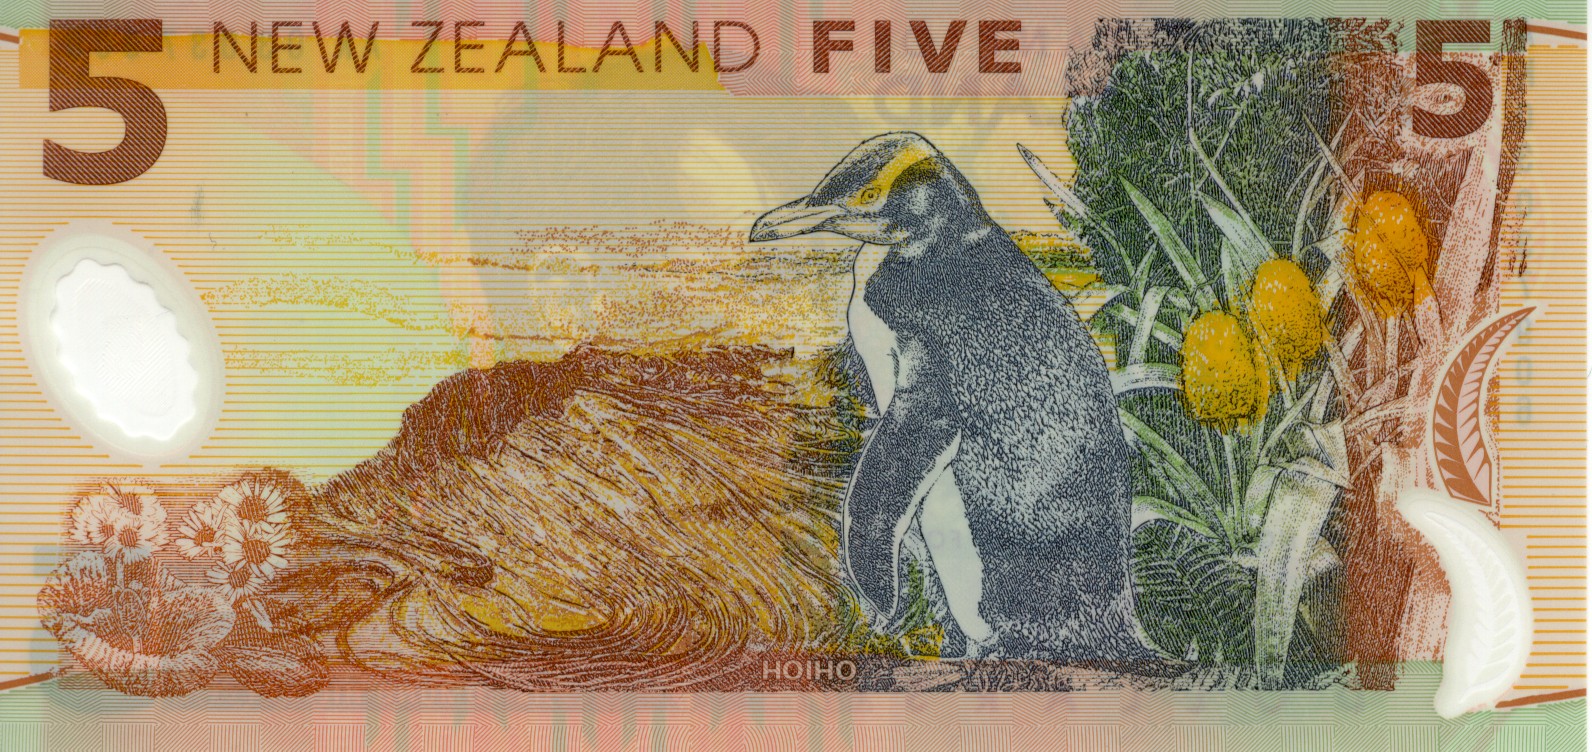 [New-Zealand-Dollar-NZD-5-bank-note-2003-issue-Campbell-Island-Hoiho-penguin-sub-antarctic-lily-bull-kelp-Pleurophyllum-speciosum-back-KAR.jpg]